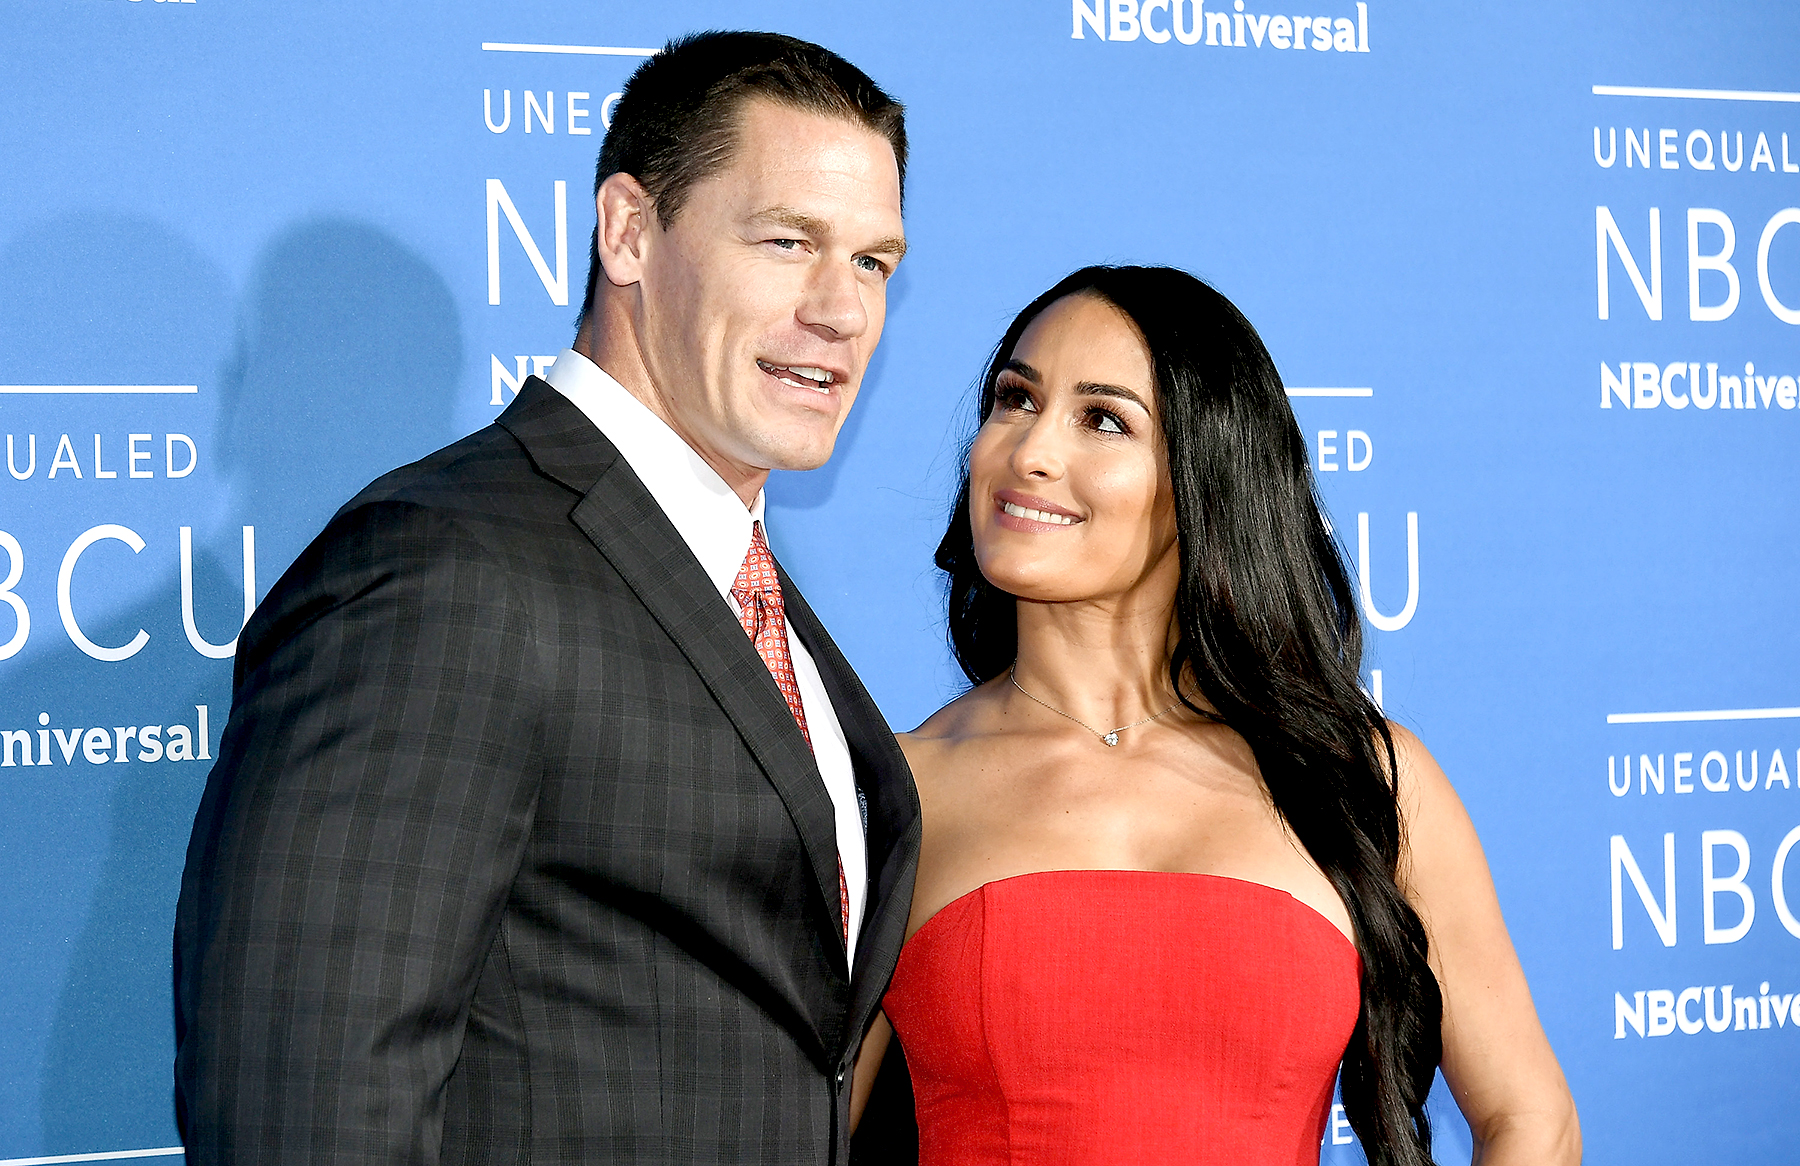 John Cena Vs Nikki Bella Xxx Videos - John Cena and Nikki Bella: A Timeline of Their Relationship | UsWeekly